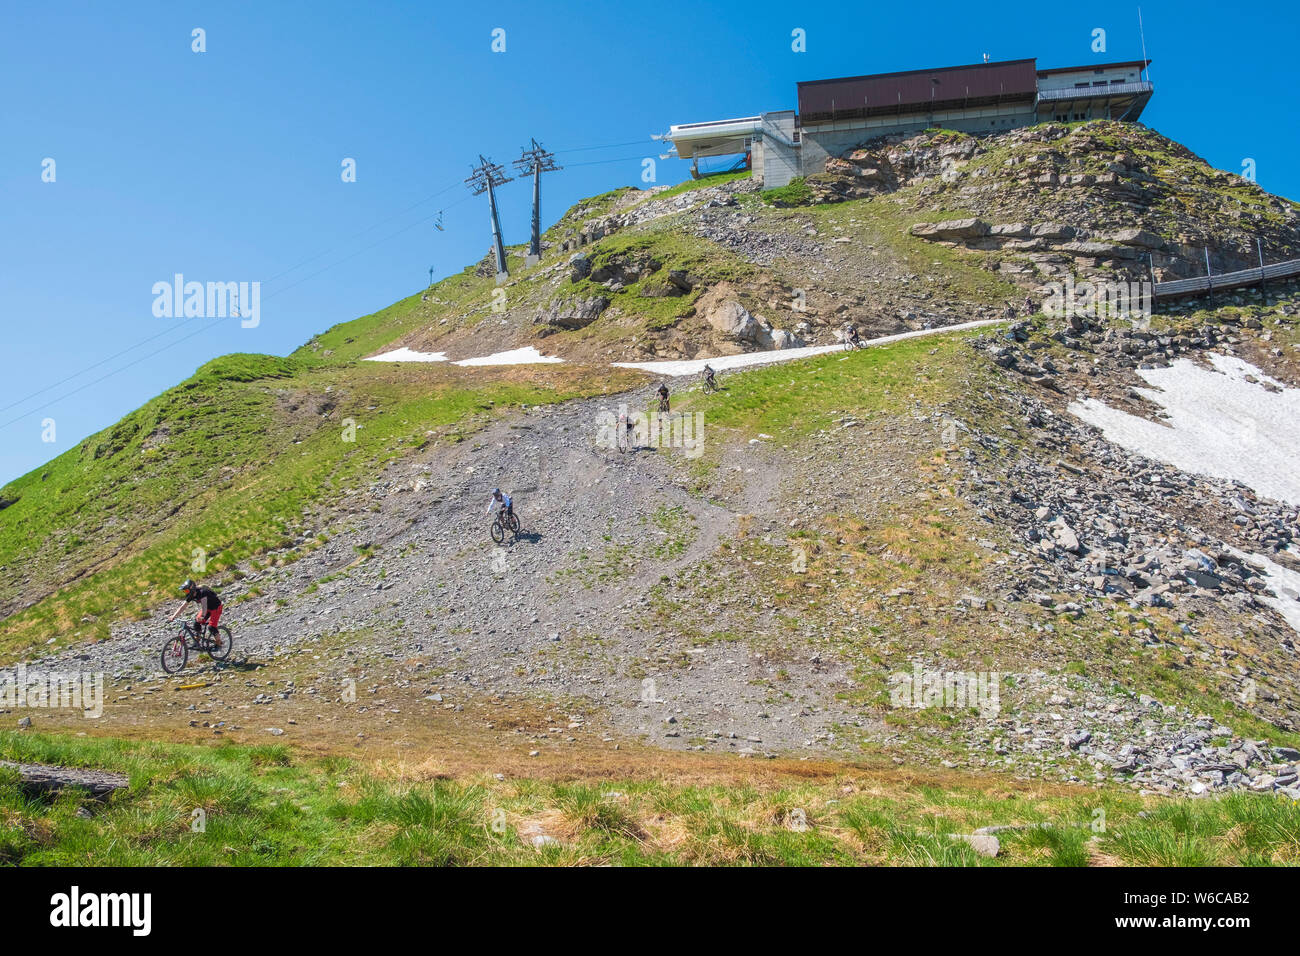 Mountain bikers at the Portes du soleil, Switzerland, riding down a steep gravel ramp. Stock Photo